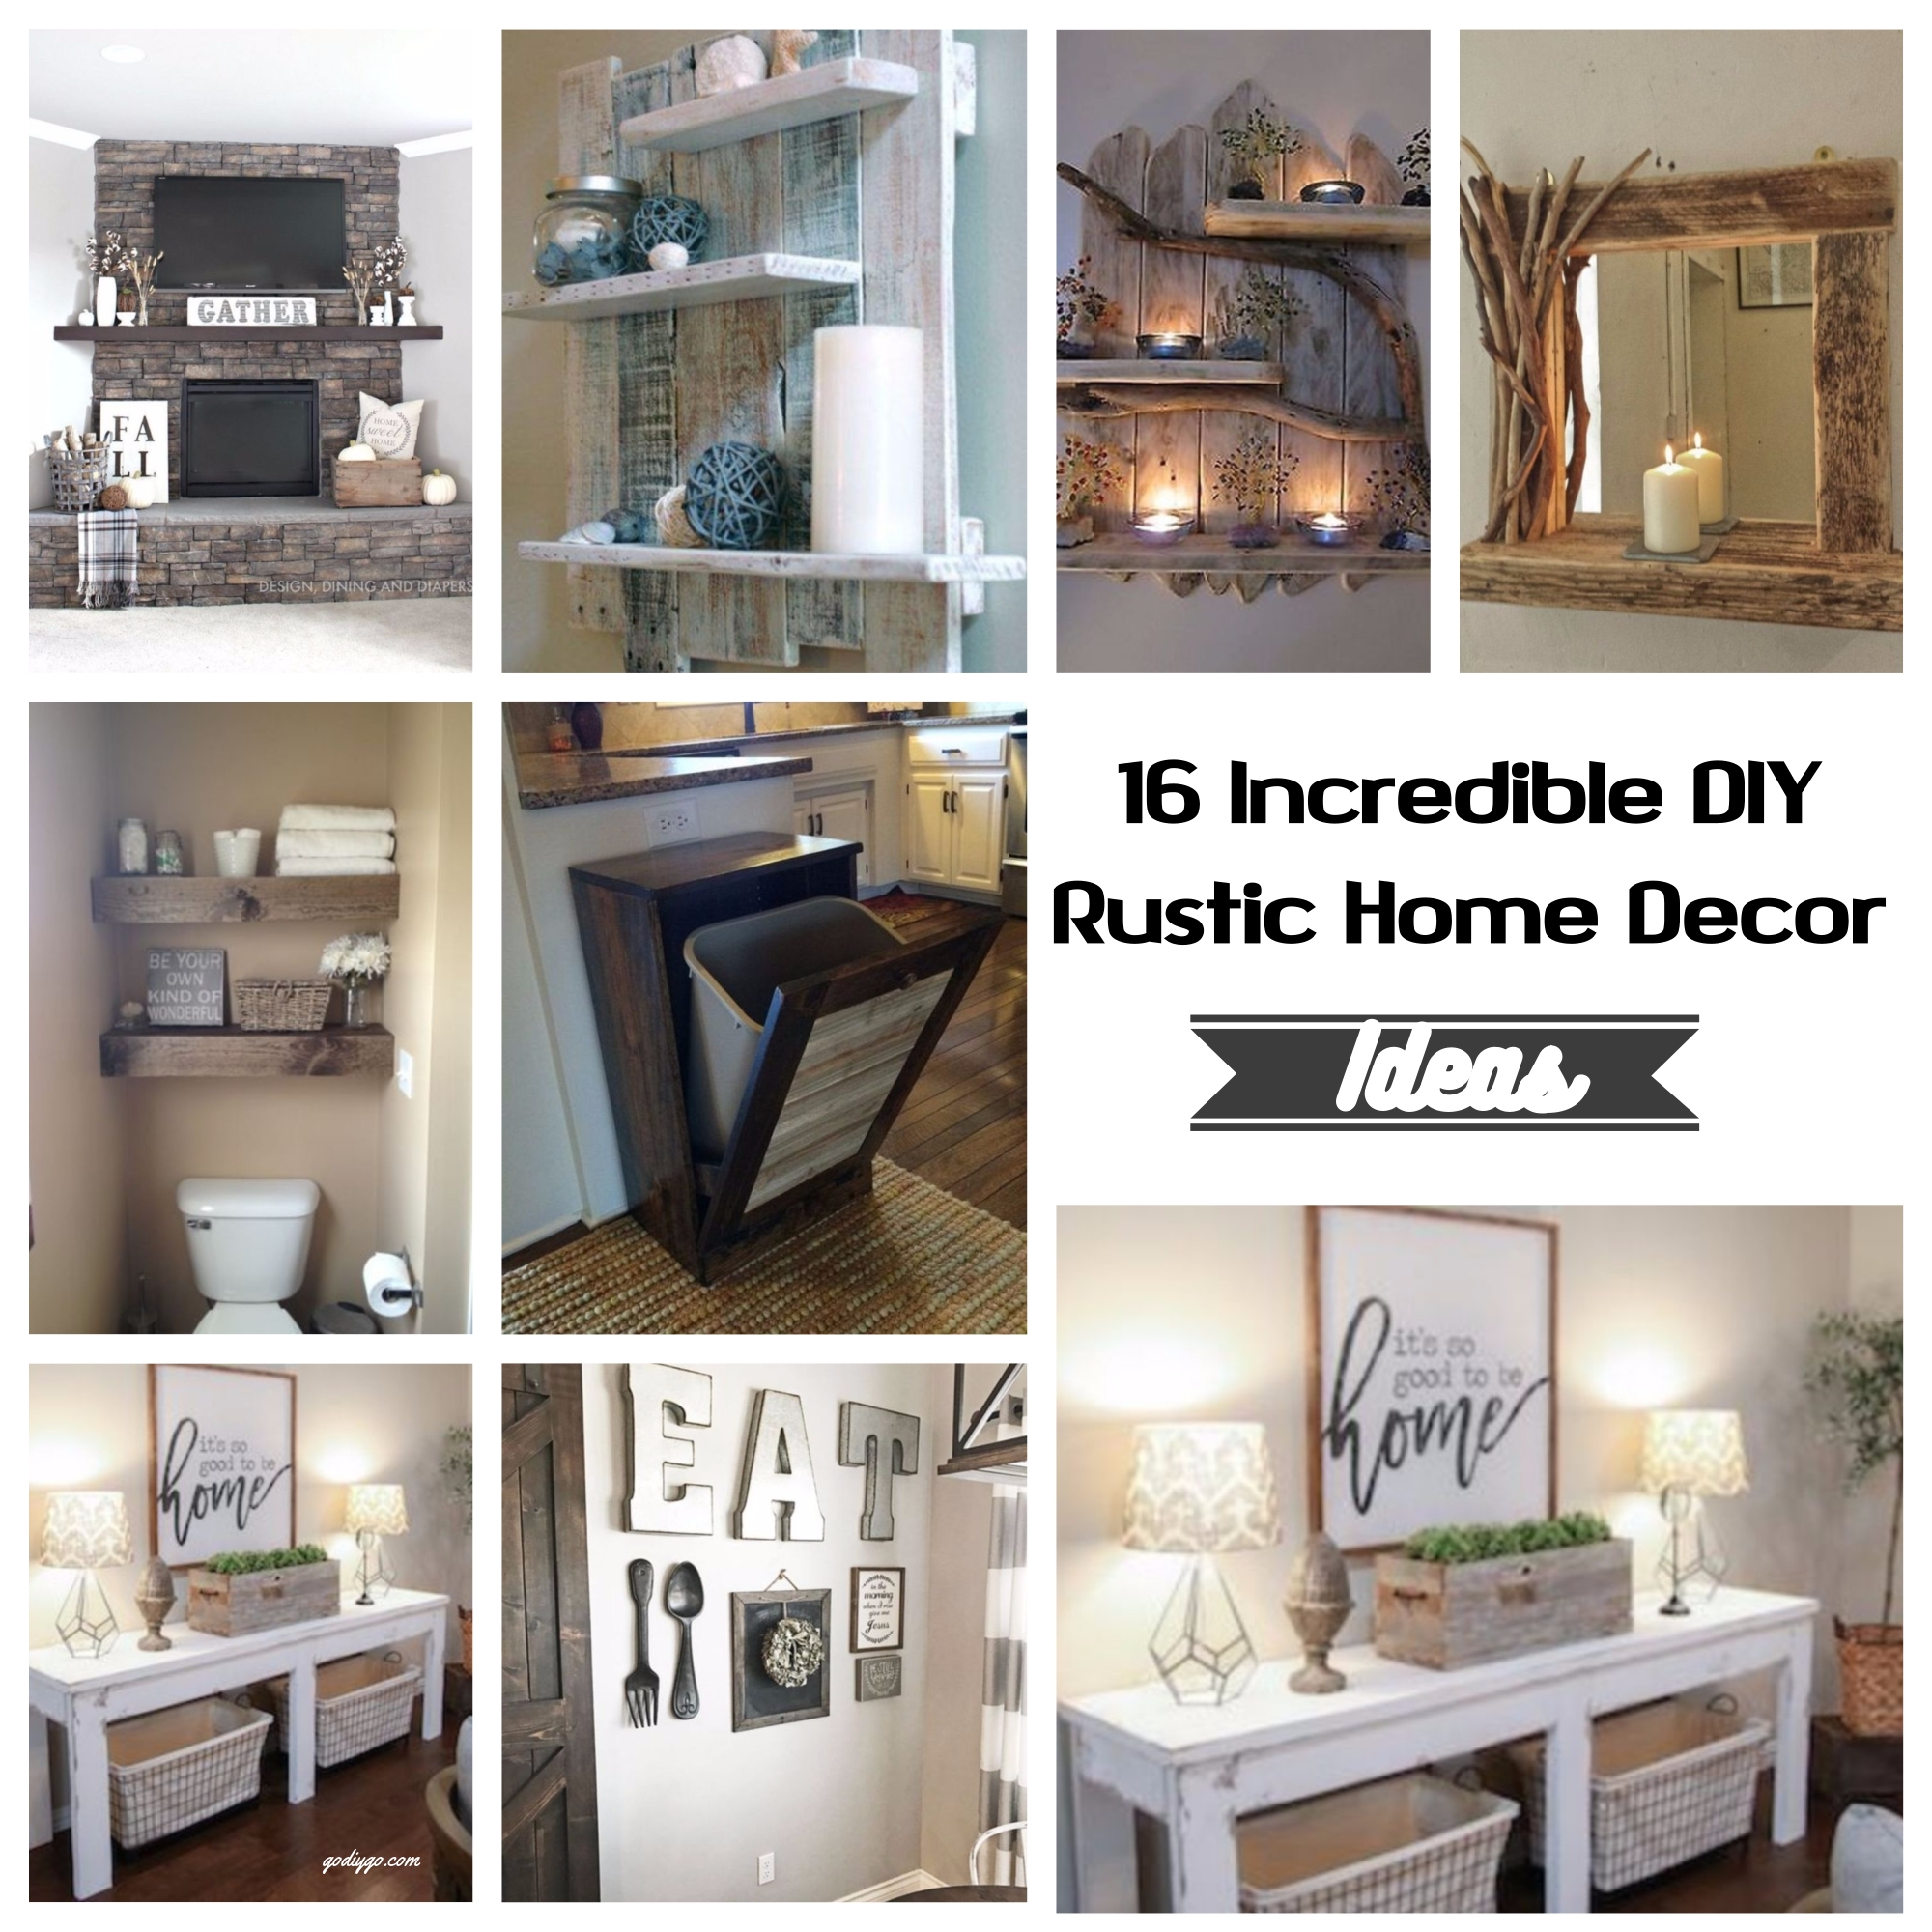 16 Incredible DIY Rustic Home Decor Ideas - GODIYGO.COM